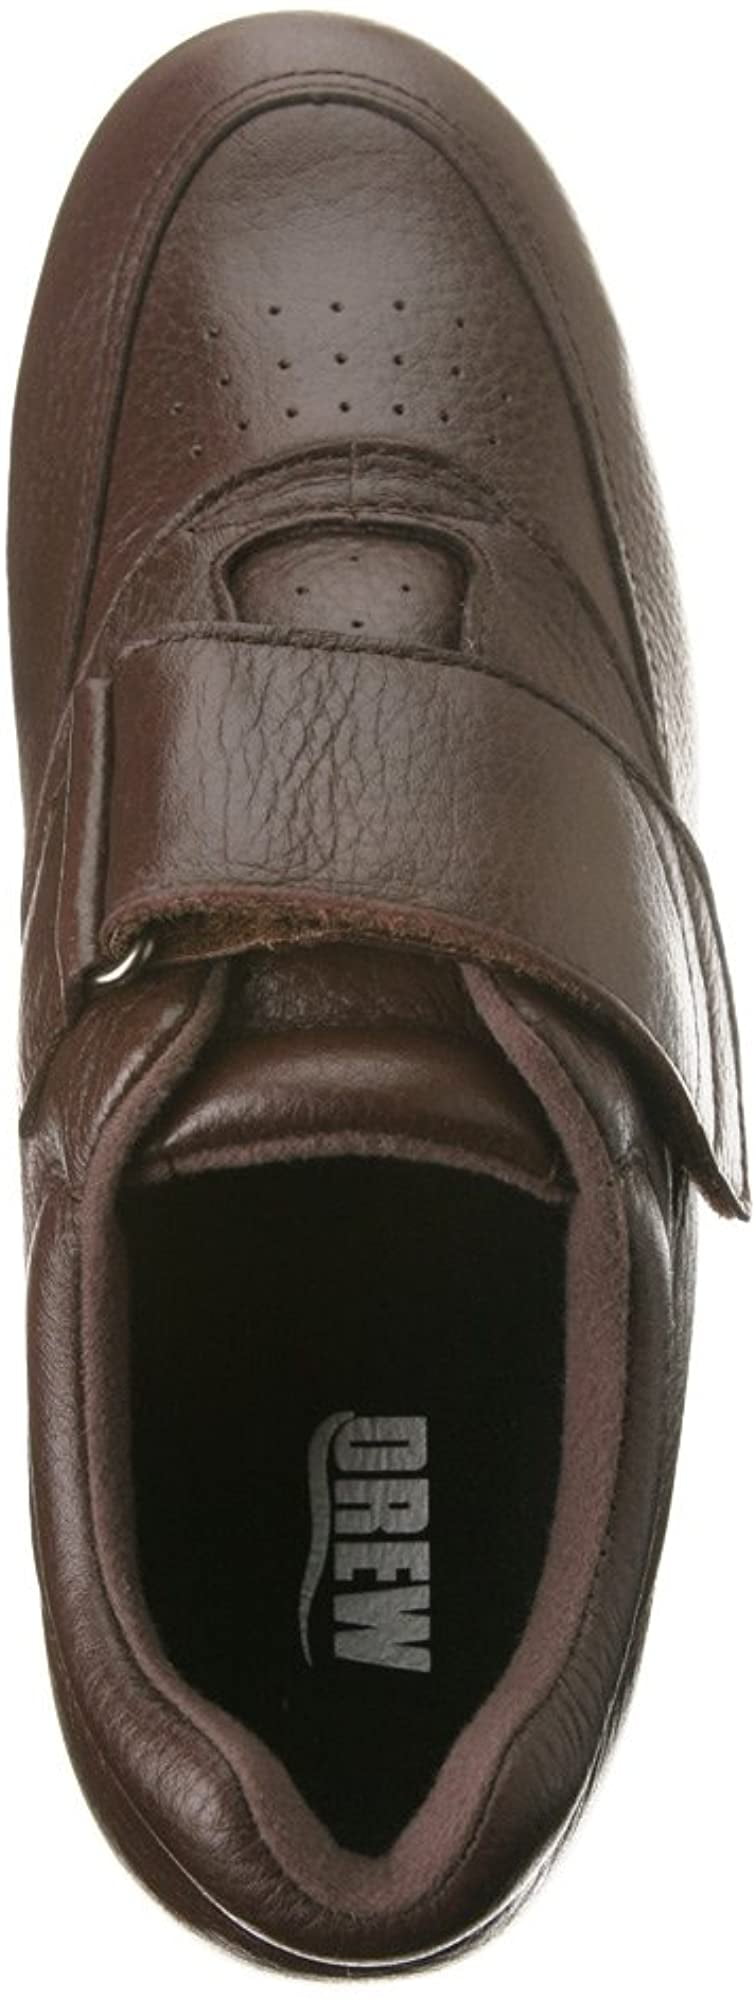 Drew Men Lightning II 40805 Leather/Mesh Tennis Shoes